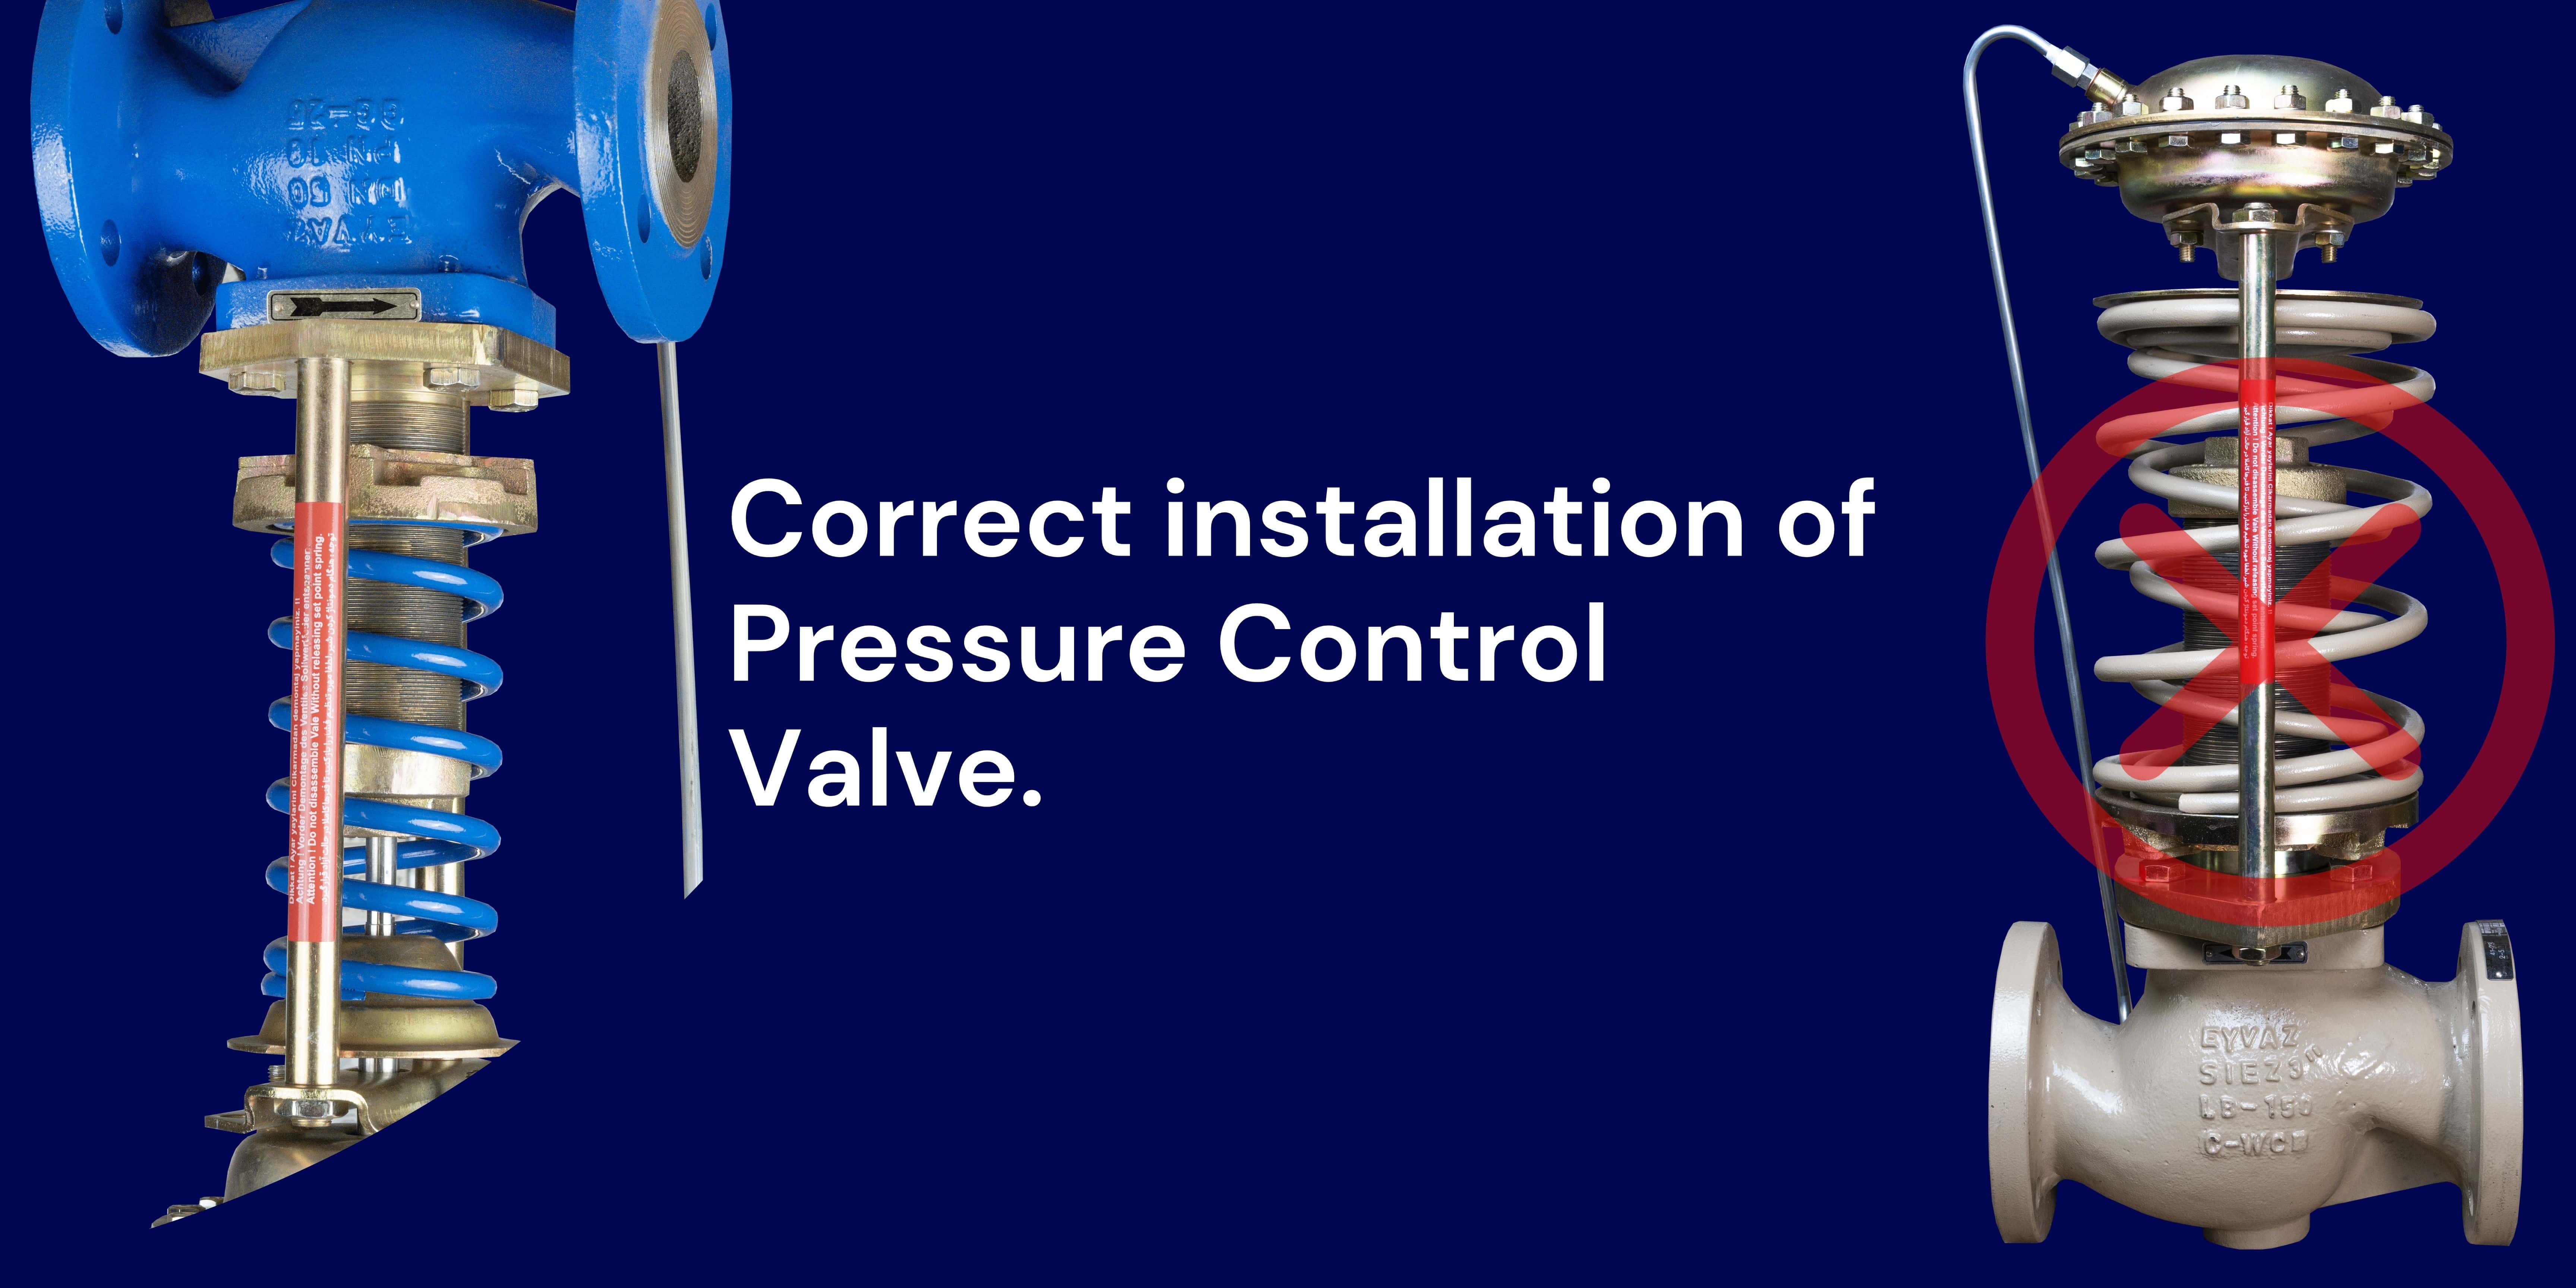 Correct installation of Pressure Control Valve